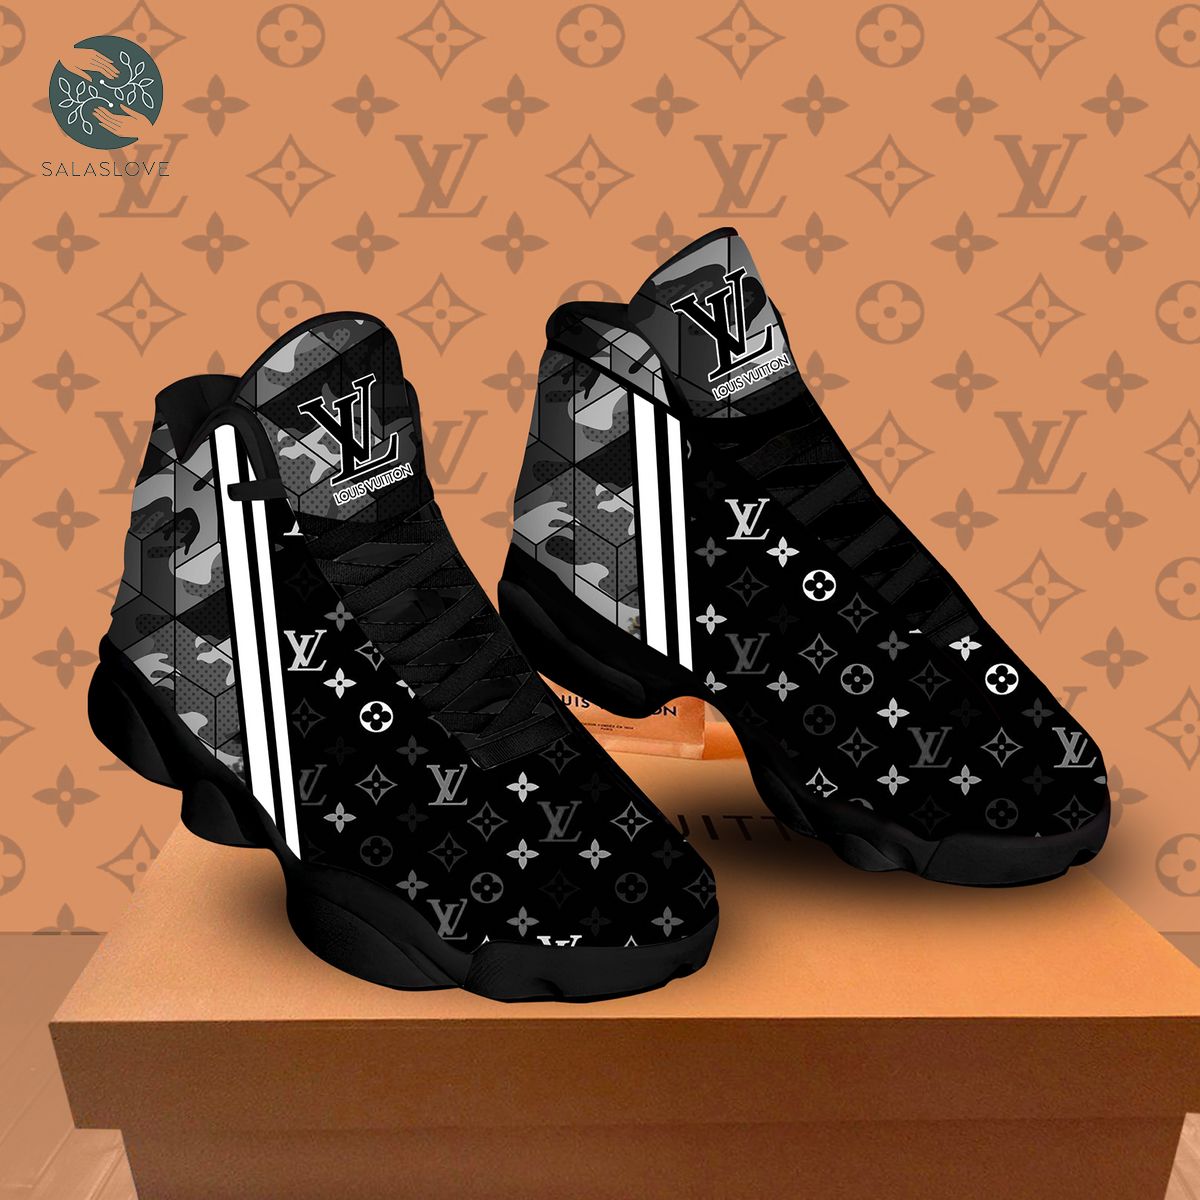 Louis Vuitton Air Jordan 13 Sneakers Shoes Gifts